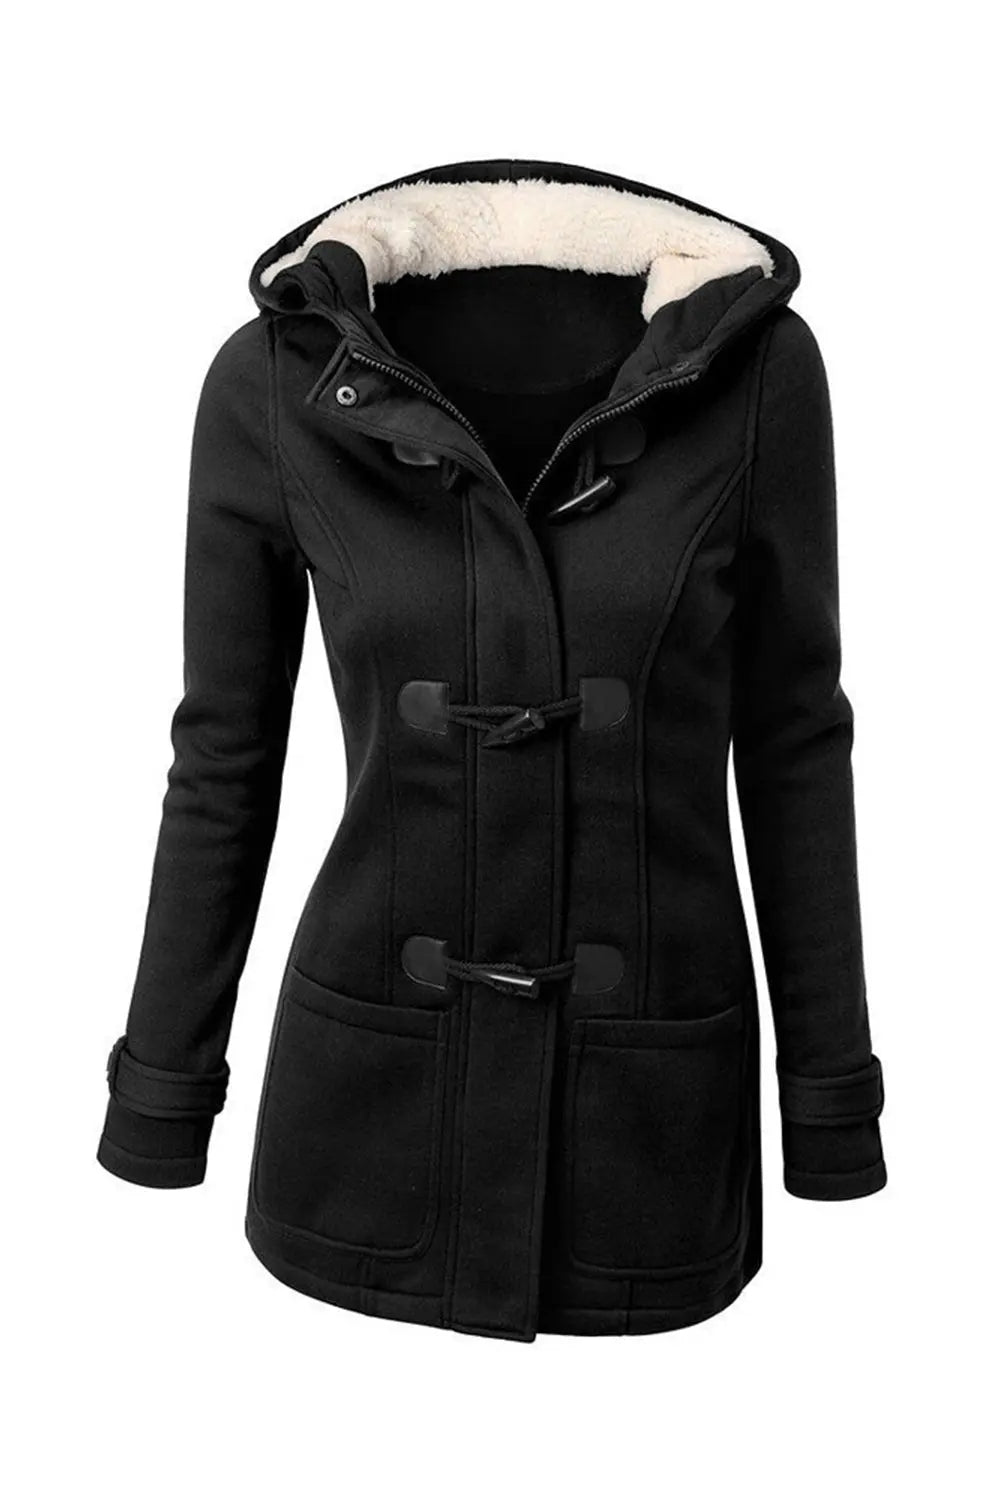 Warm Winter Fur Collar Jackets - Black - Strange Clothes